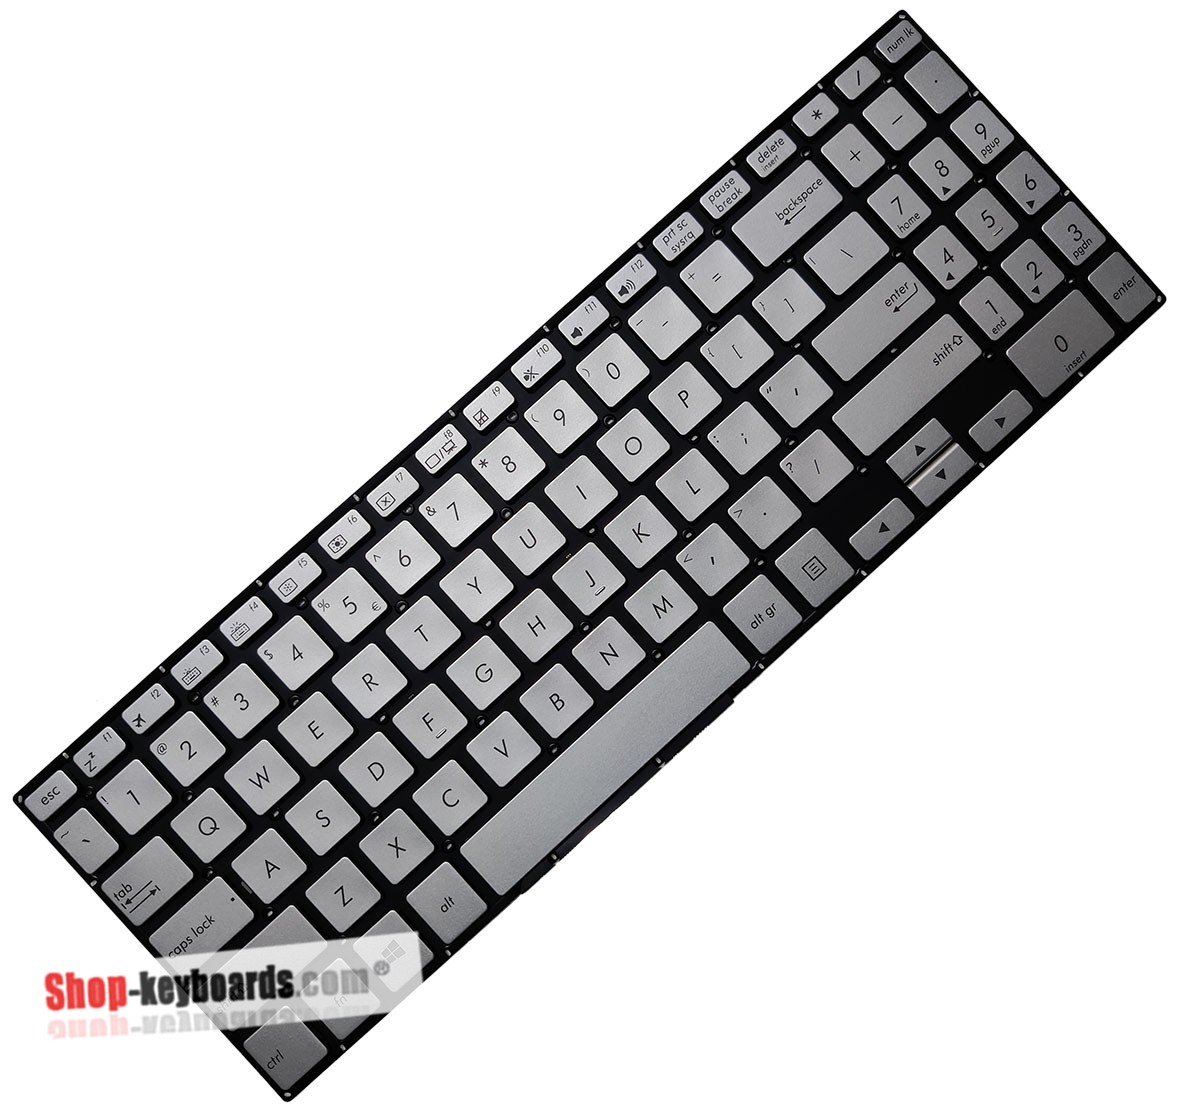 Asus 0KNB0-5632LA00 Keyboard replacement